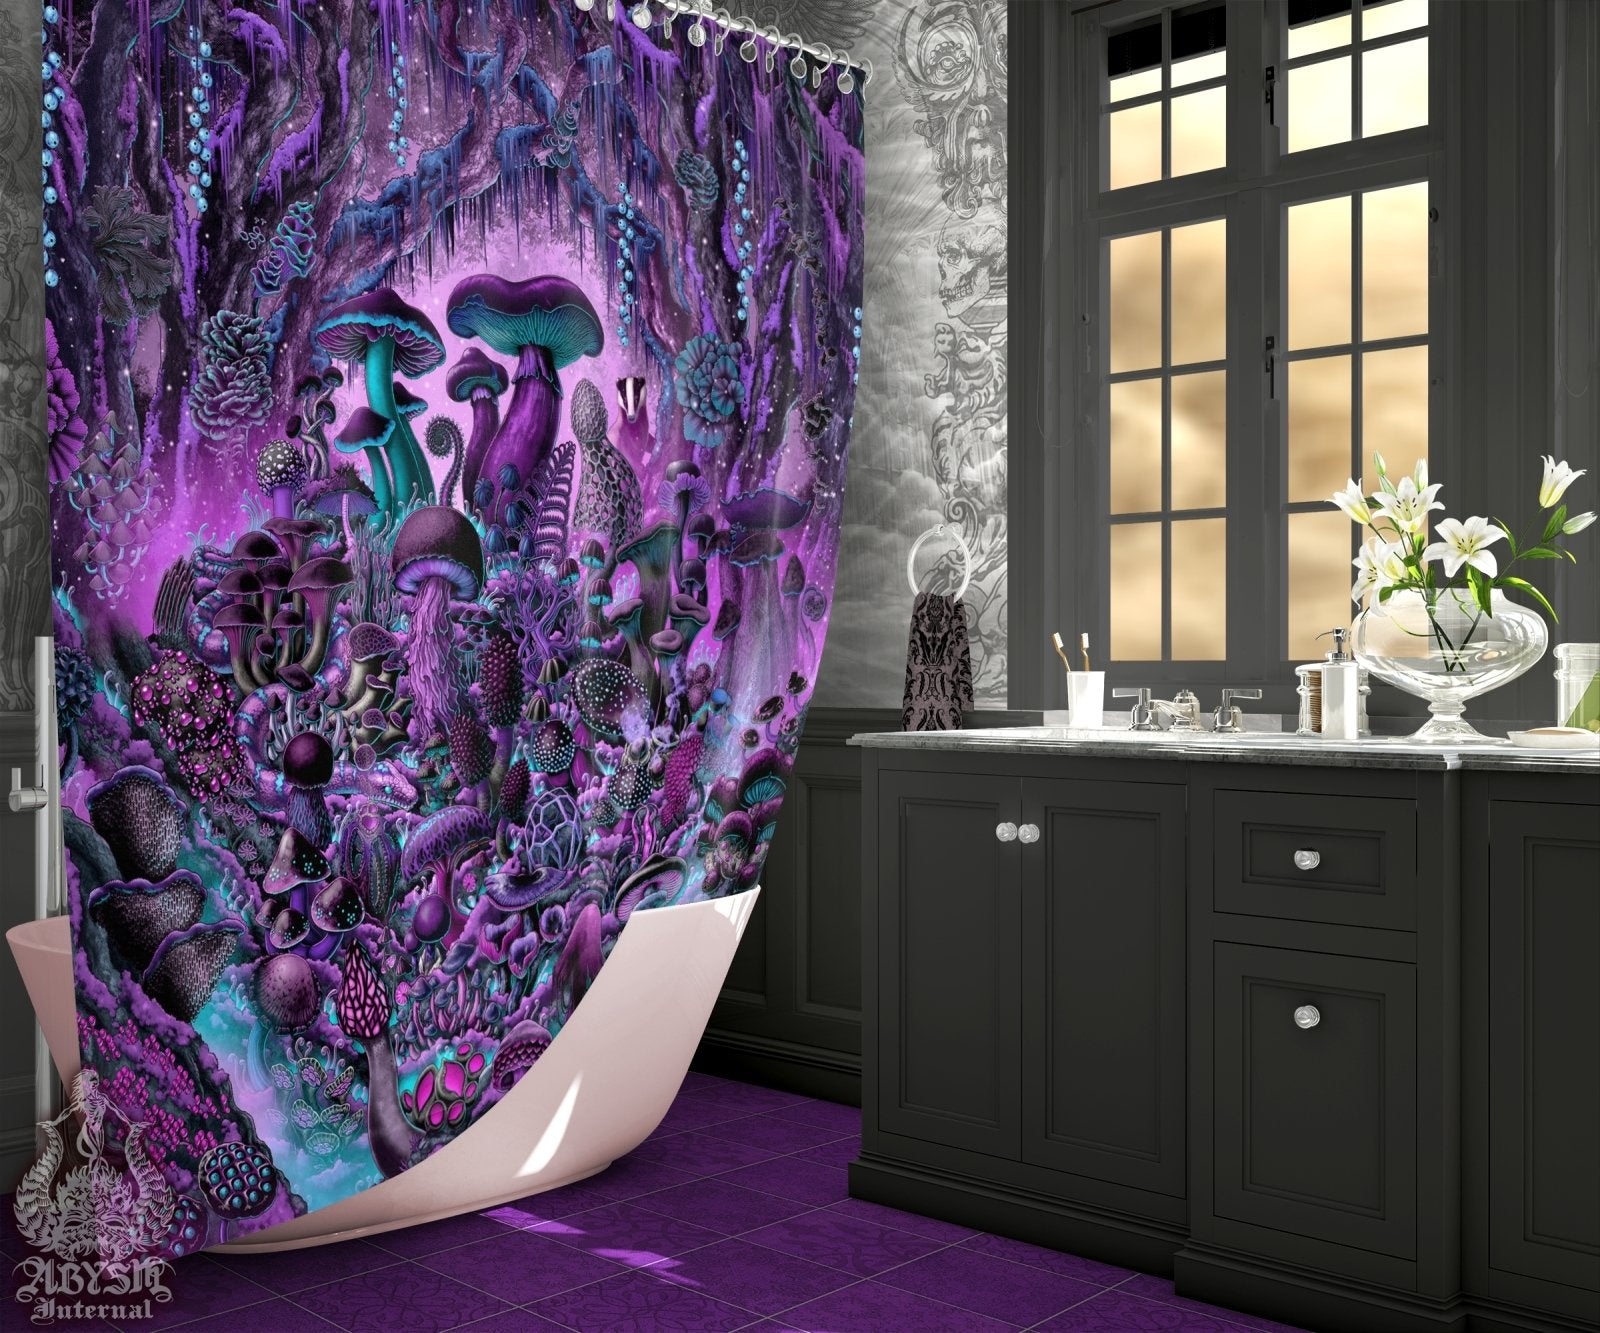 Gothic Mushrooms Shower Curtain, Dark Bathroom Decor, Pastel Goth Home Art, Mycology Print - Magic Shrooms - Abysm Internal